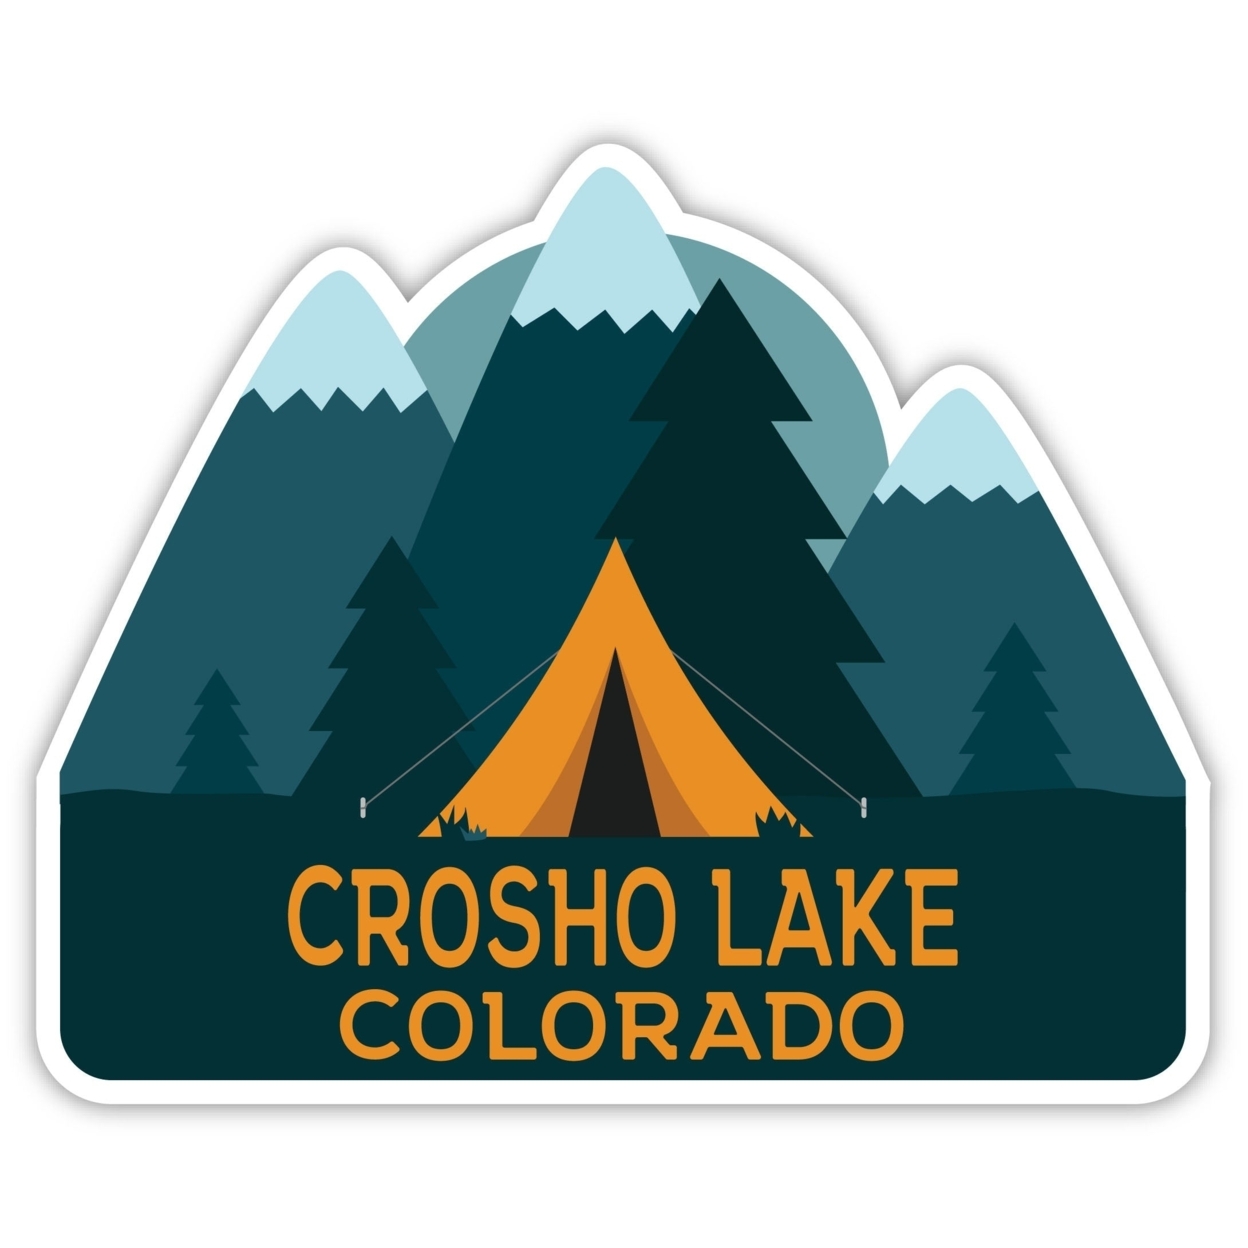 Crosho Lake Colorado Souvenir Decorative Stickers (Choose Theme And Size) - Single Unit, 2-Inch, Tent